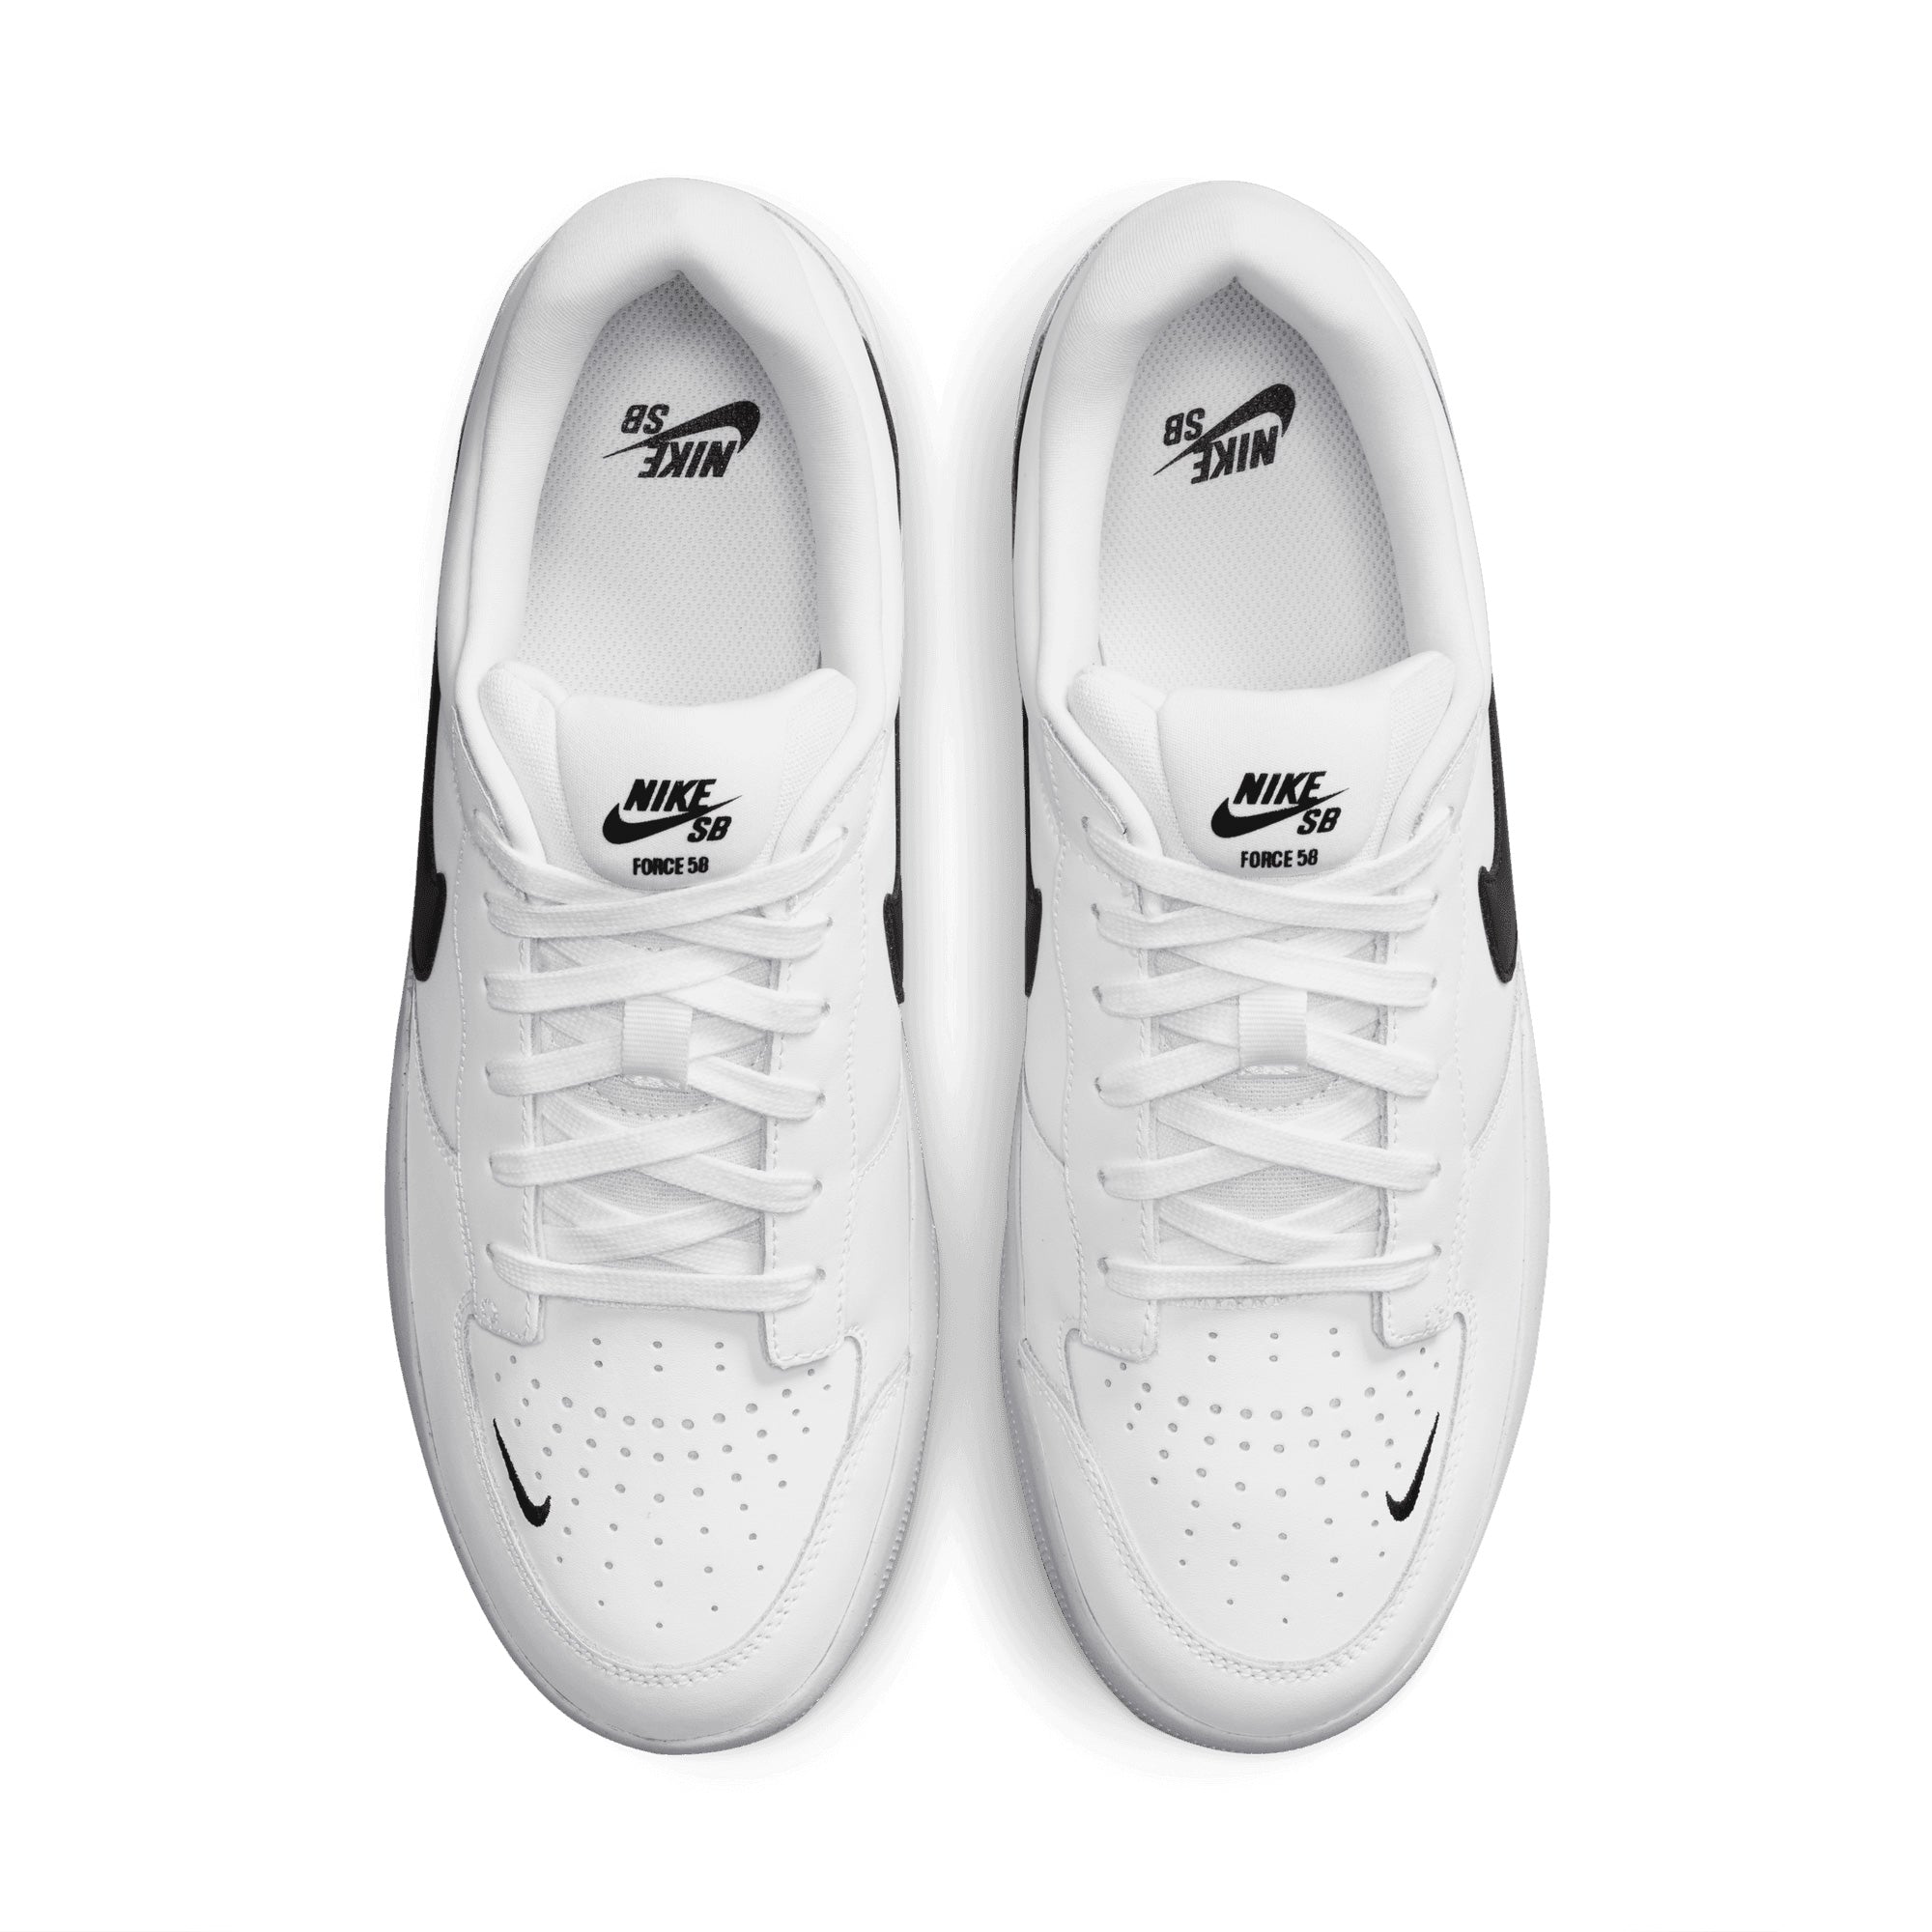 Nike SB Force 58 Premium Shoes - White/Black-White